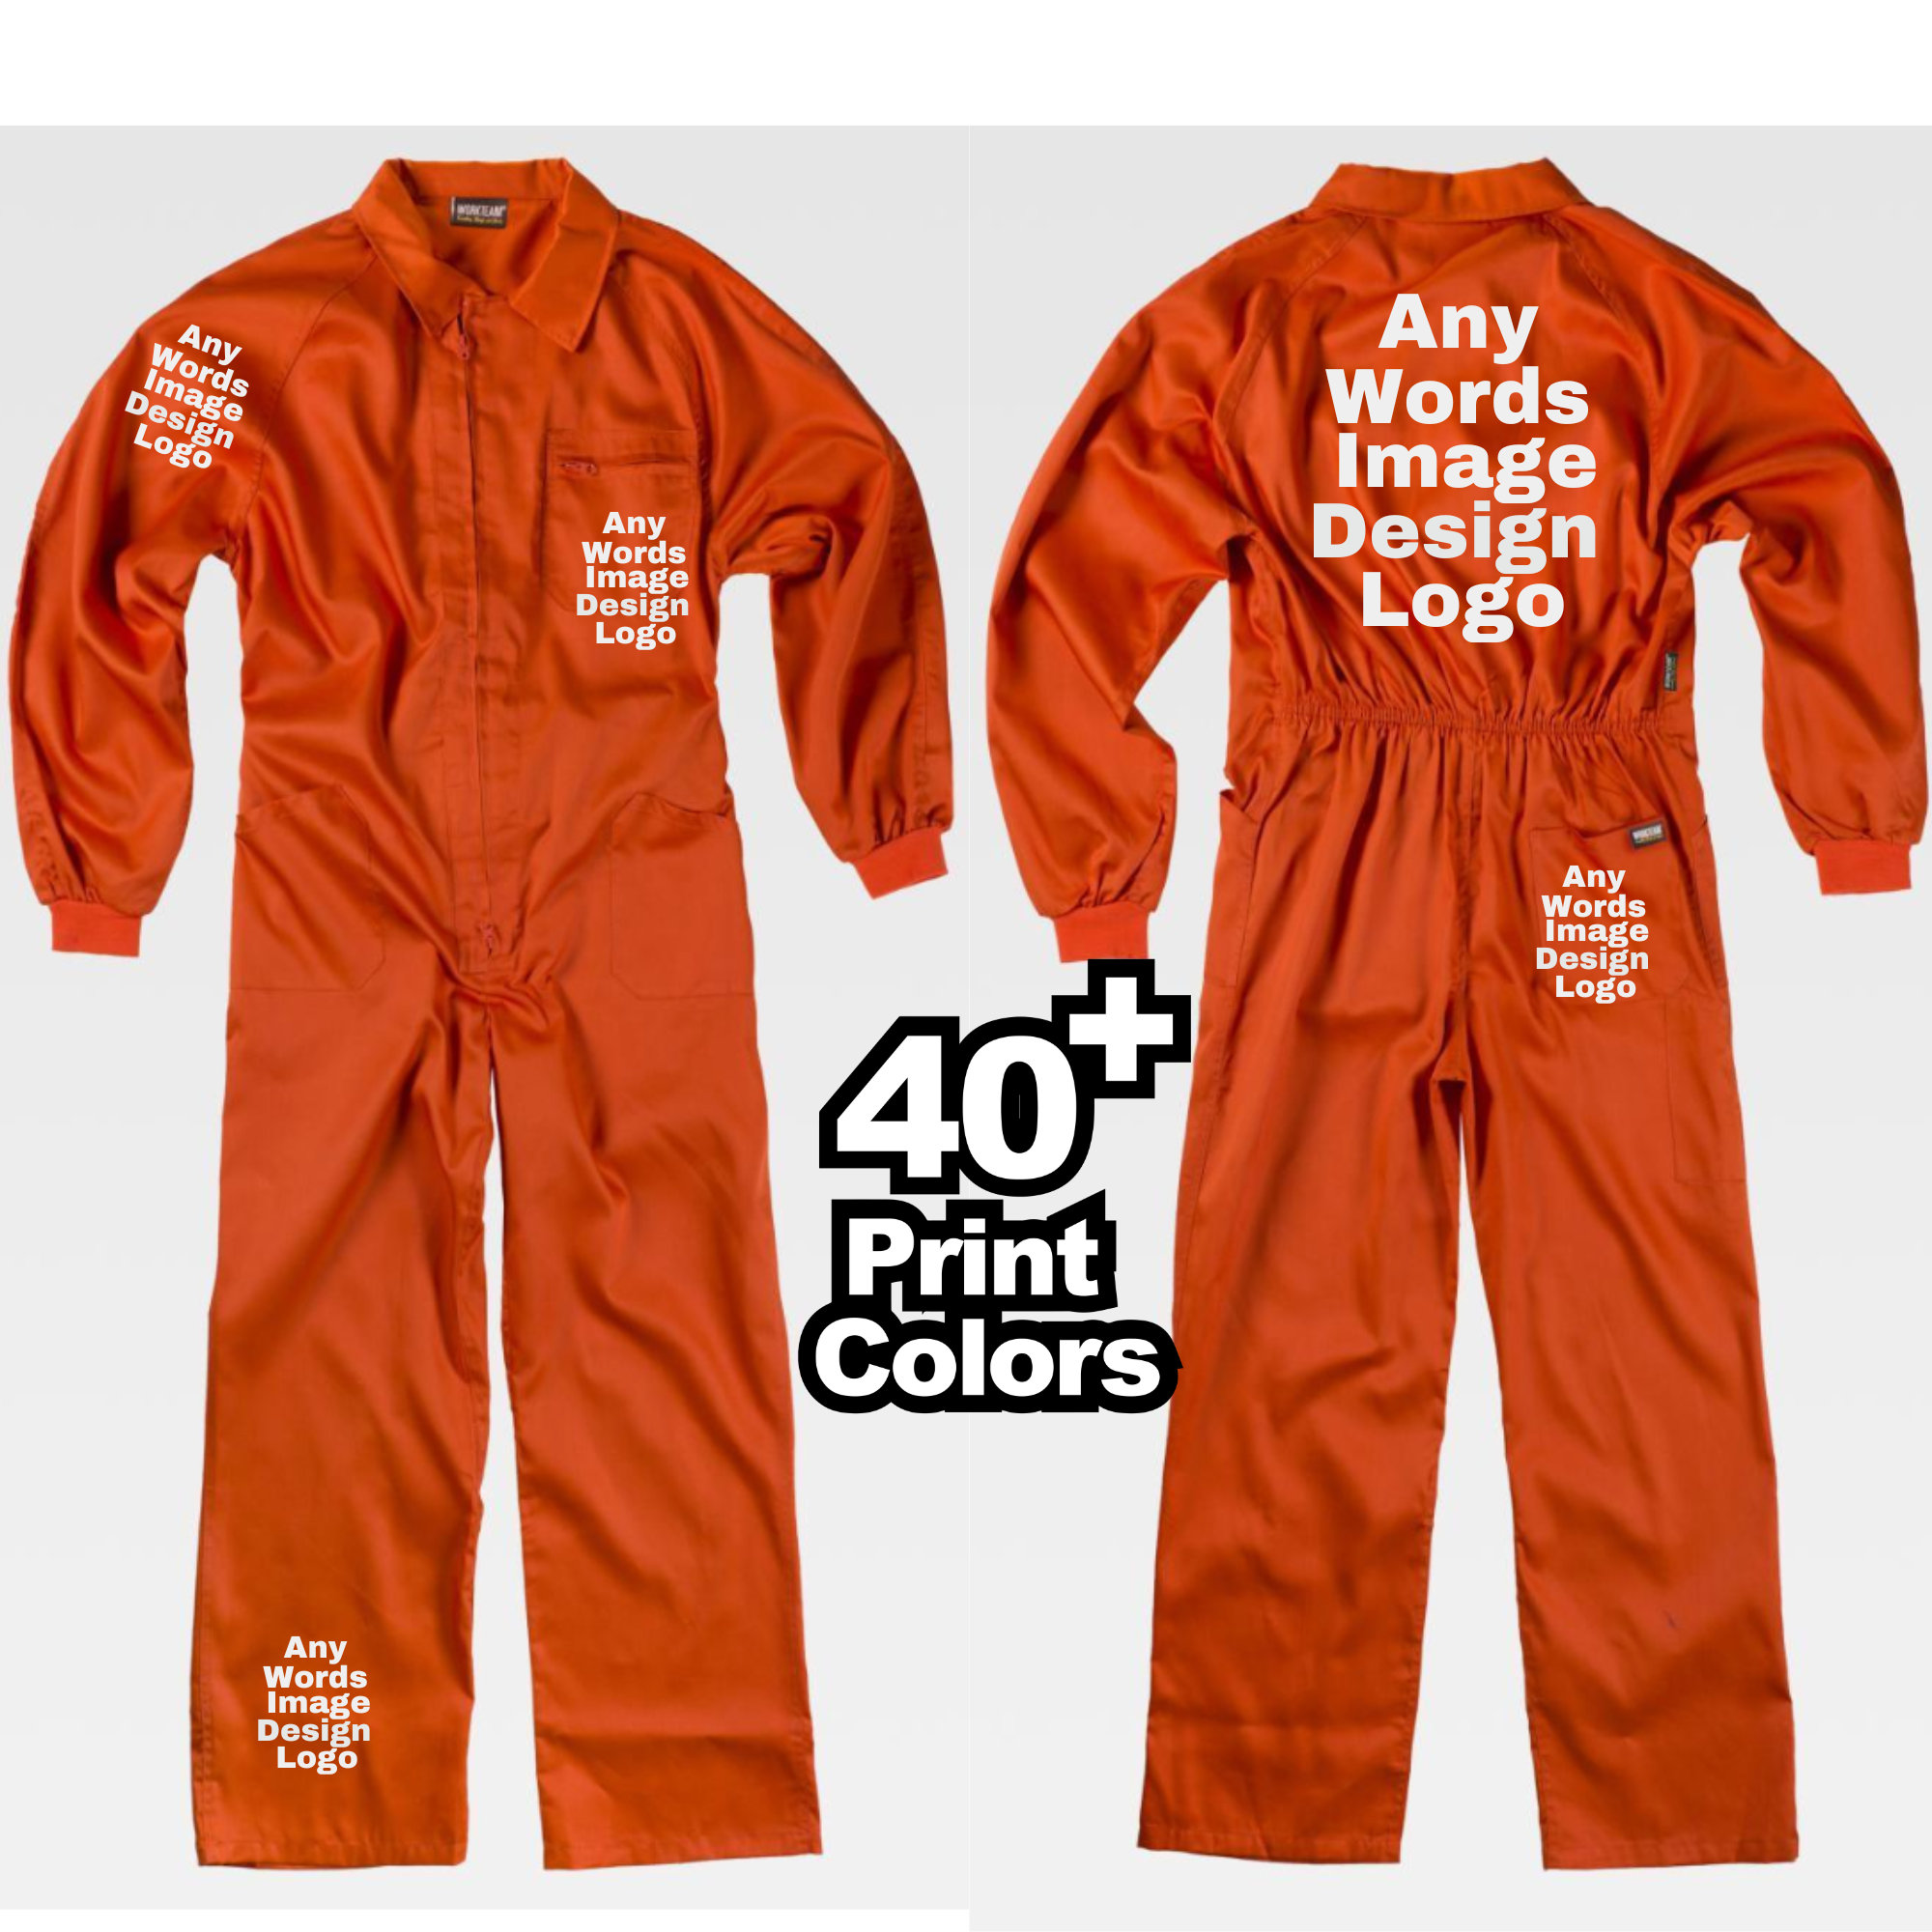 Men's Prison Orange Jumpsuit